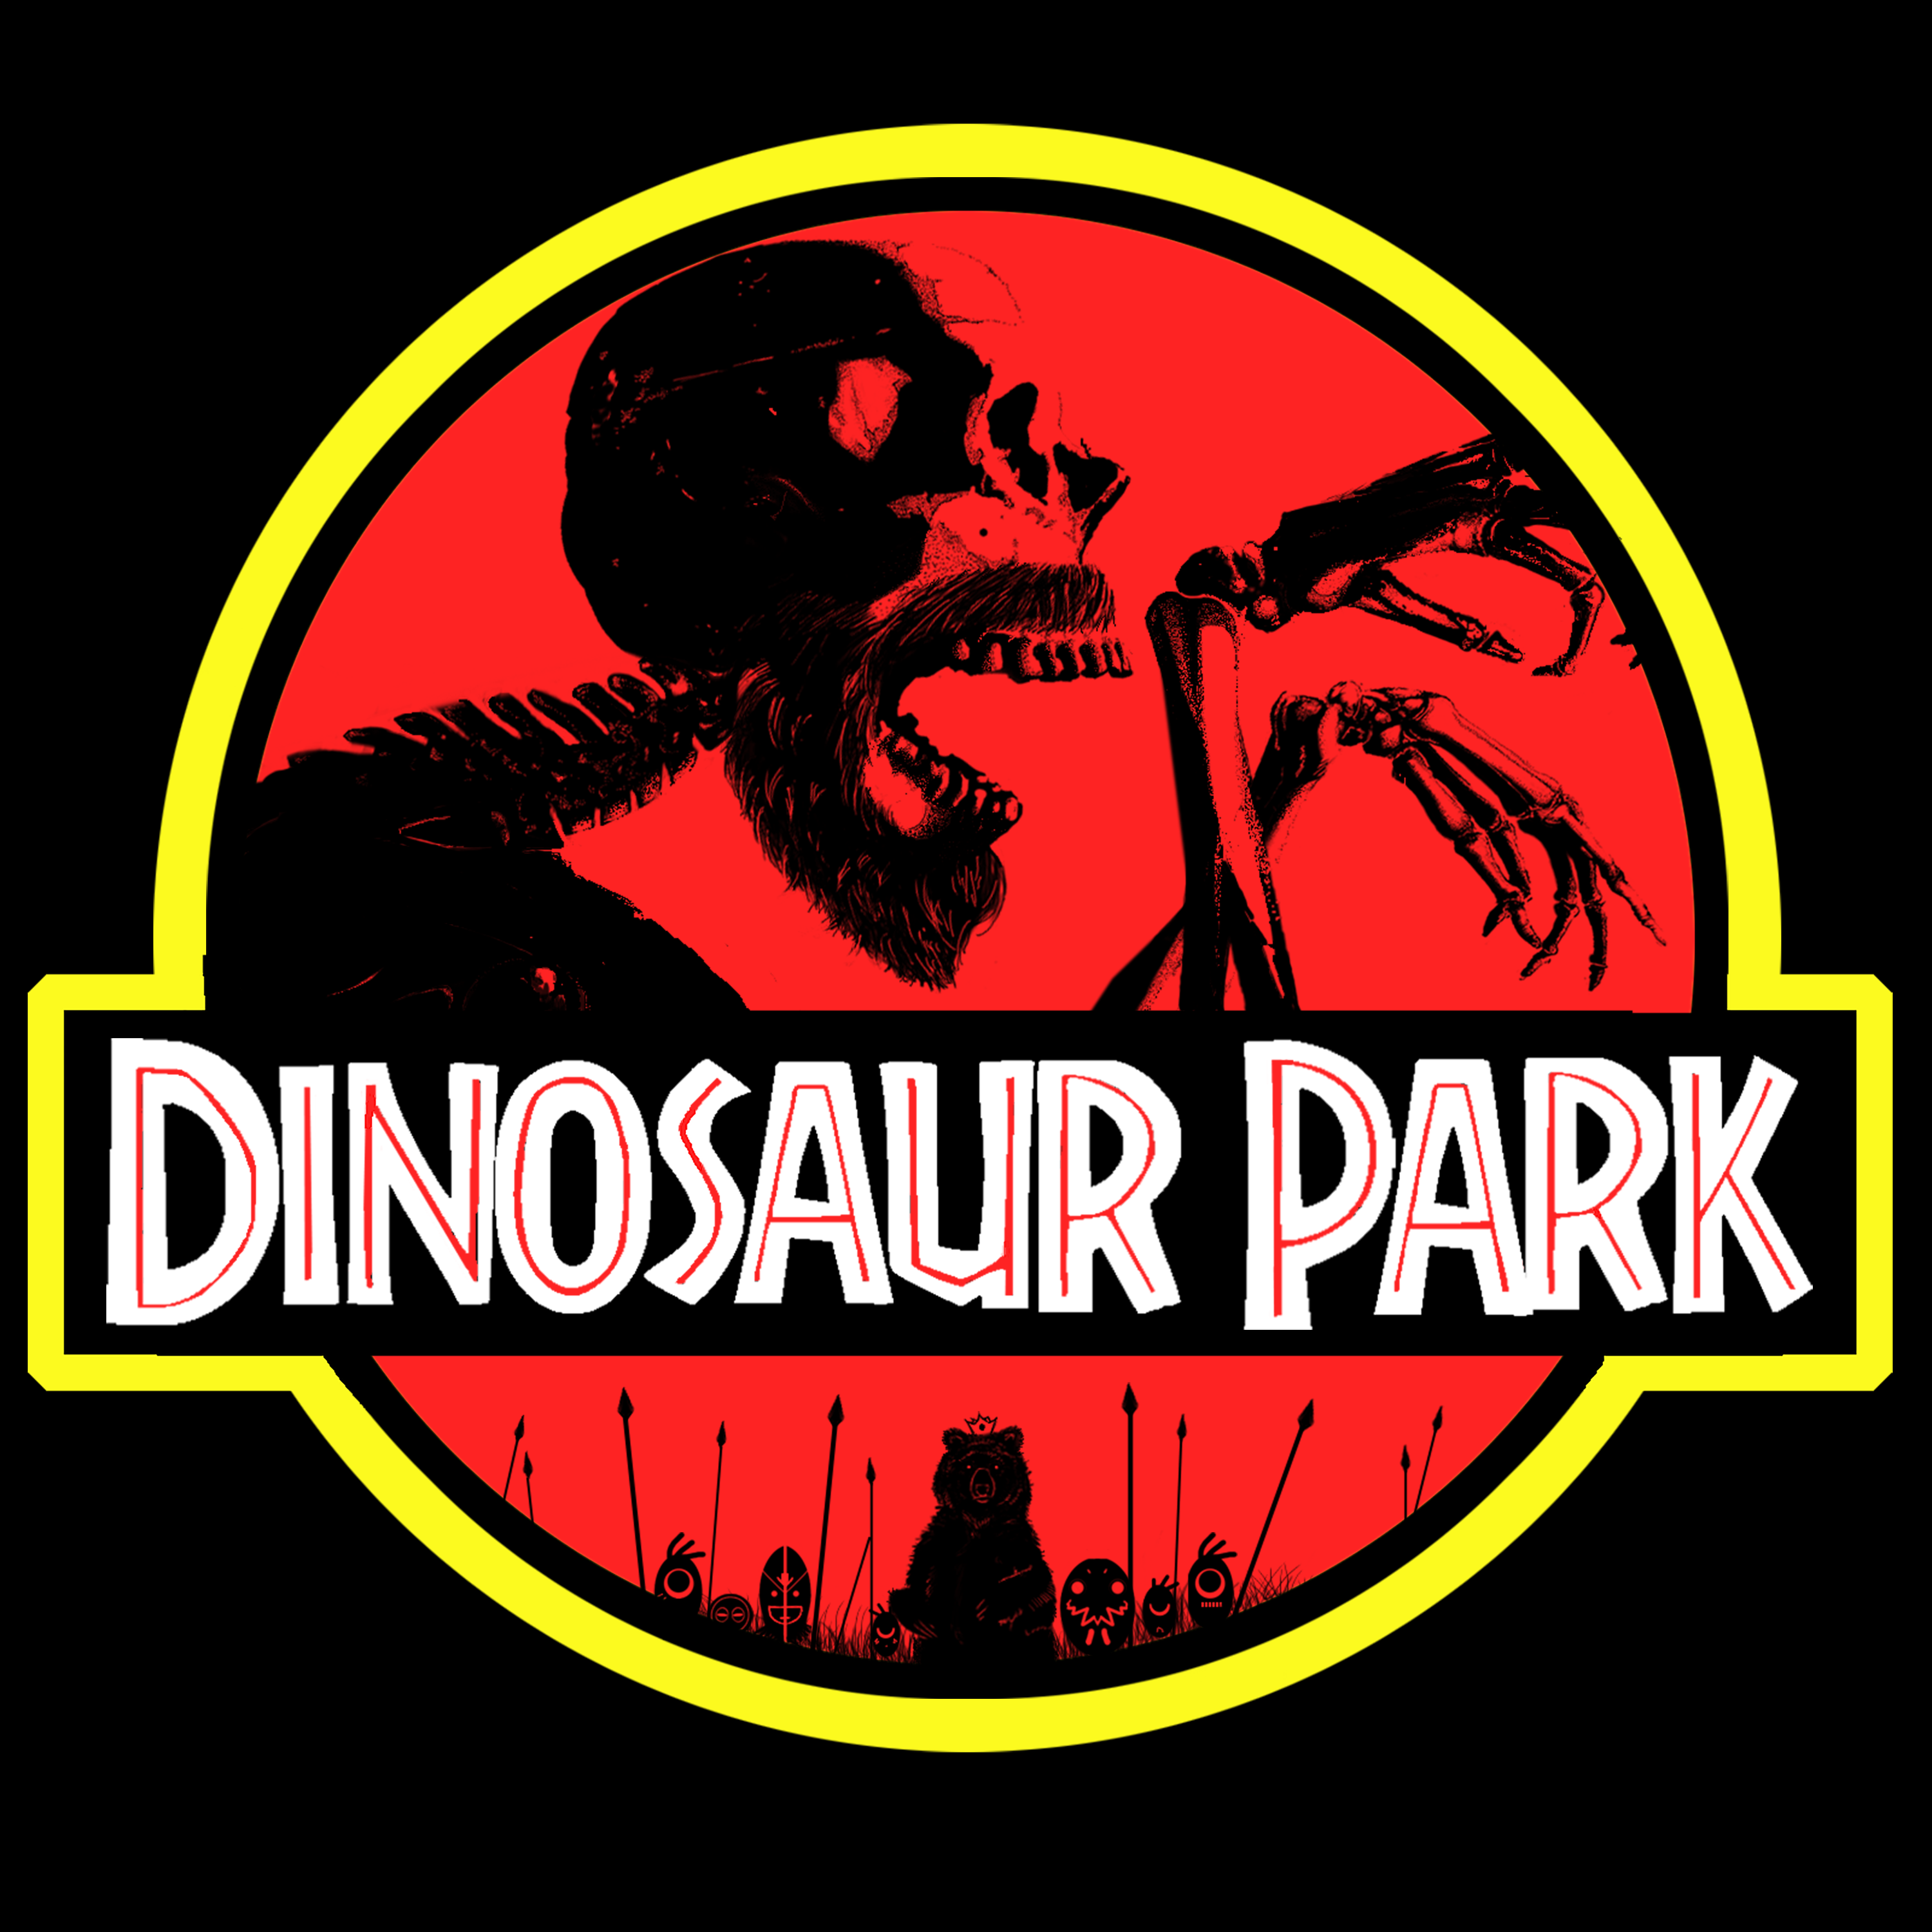 Dinosaur Park #7 Lunch 'n' Snack